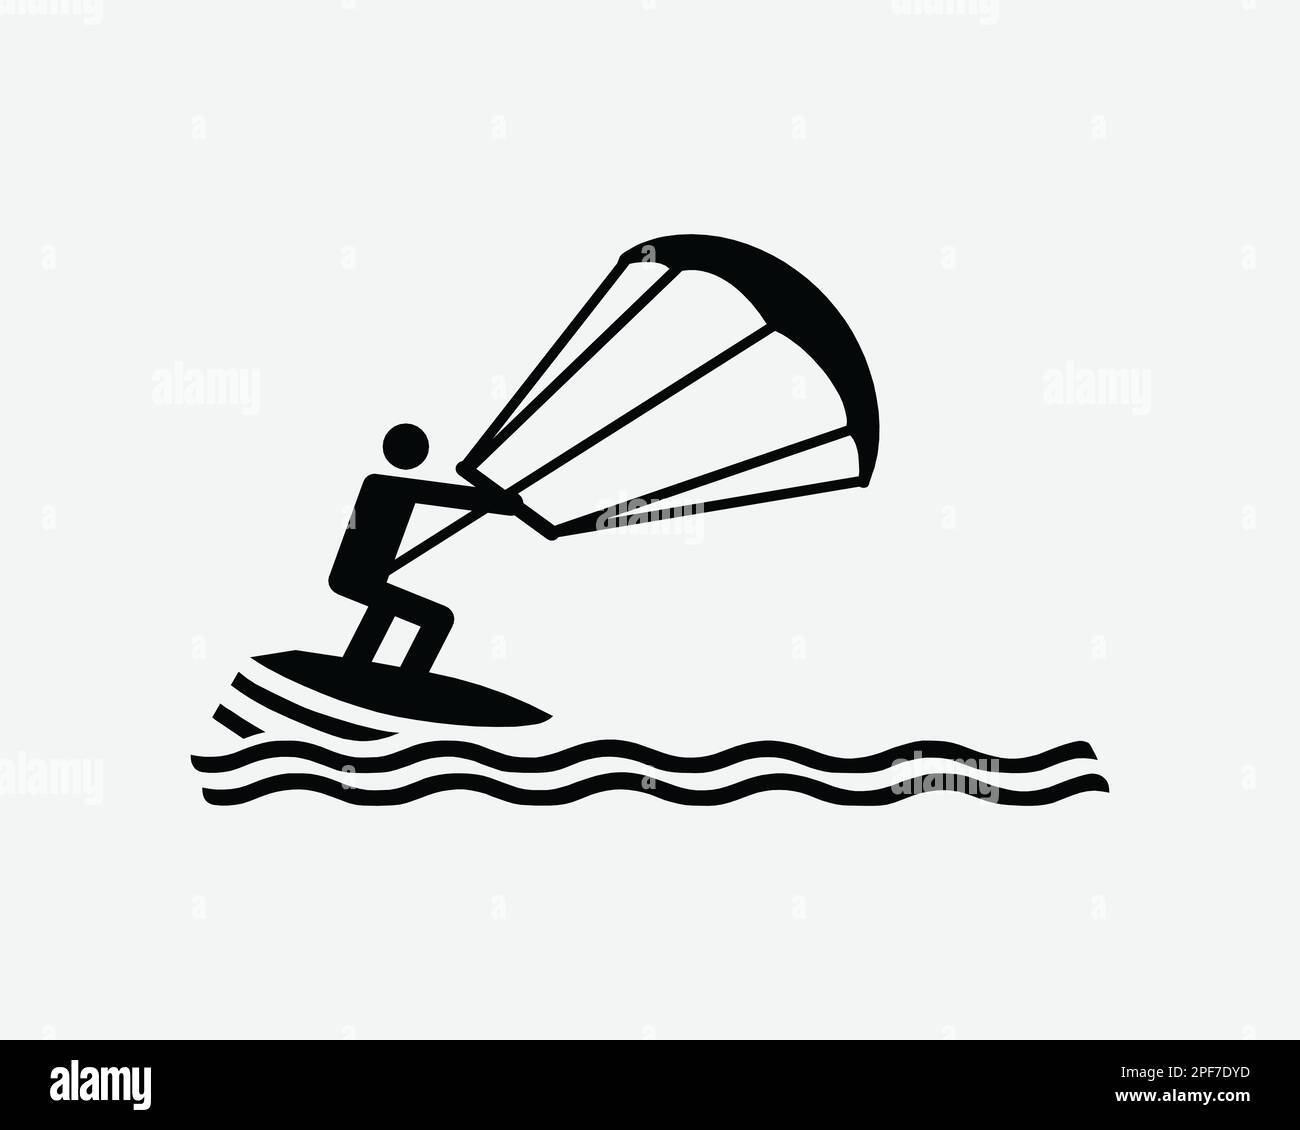 Icône de kiteboarding Kitesurfing Kite Boarding surf Sports Vector Noir blanc Silhouette symbole signe graphique Clipart Illustration pictogramme Illustration de Vecteur